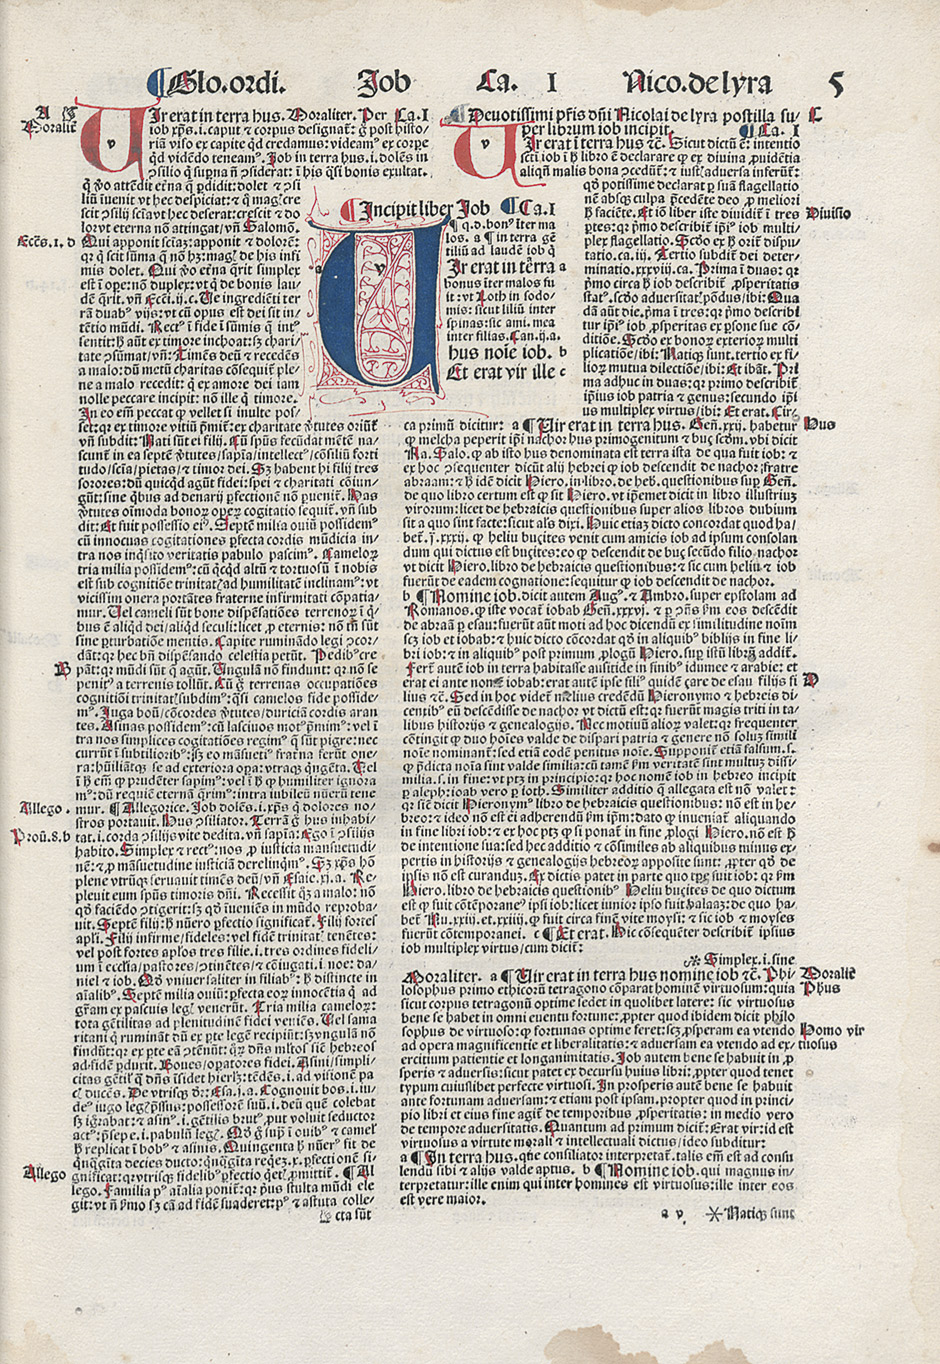 Lot 1071, Auction  115, Textus Biblie, cum glosa ordinaria Nicolai de Lyra postilla